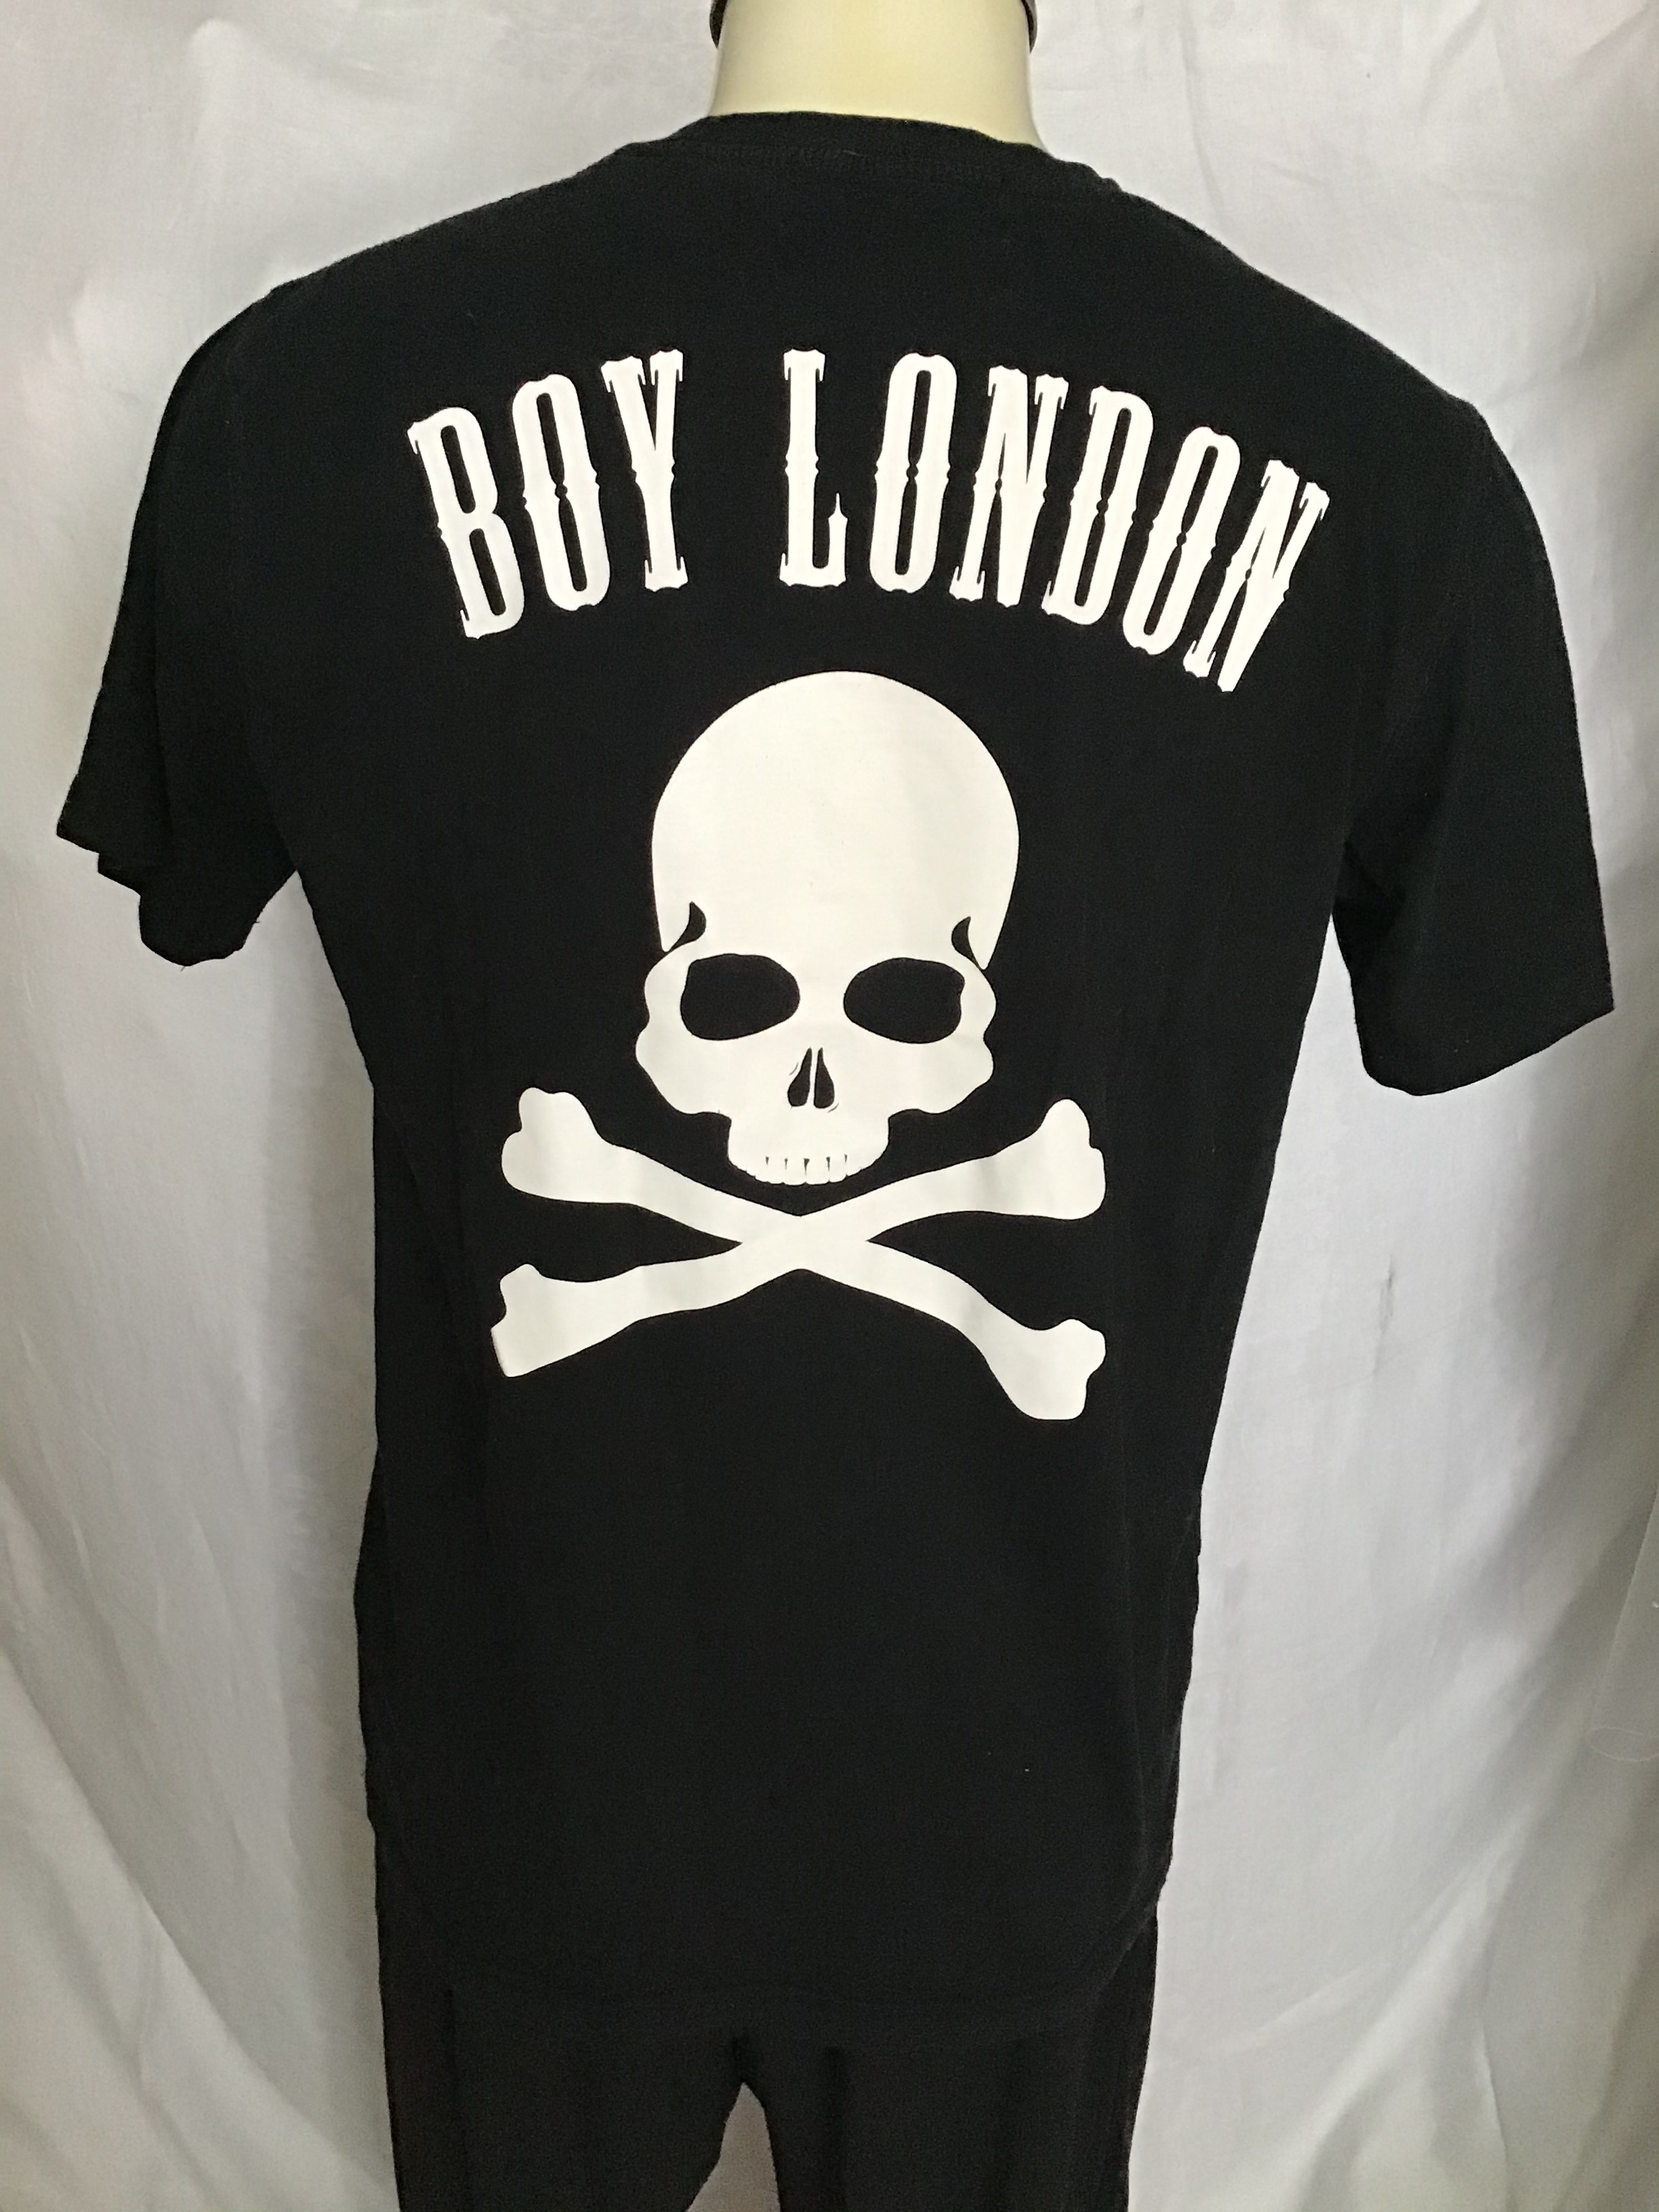 "Boy" London studded Top